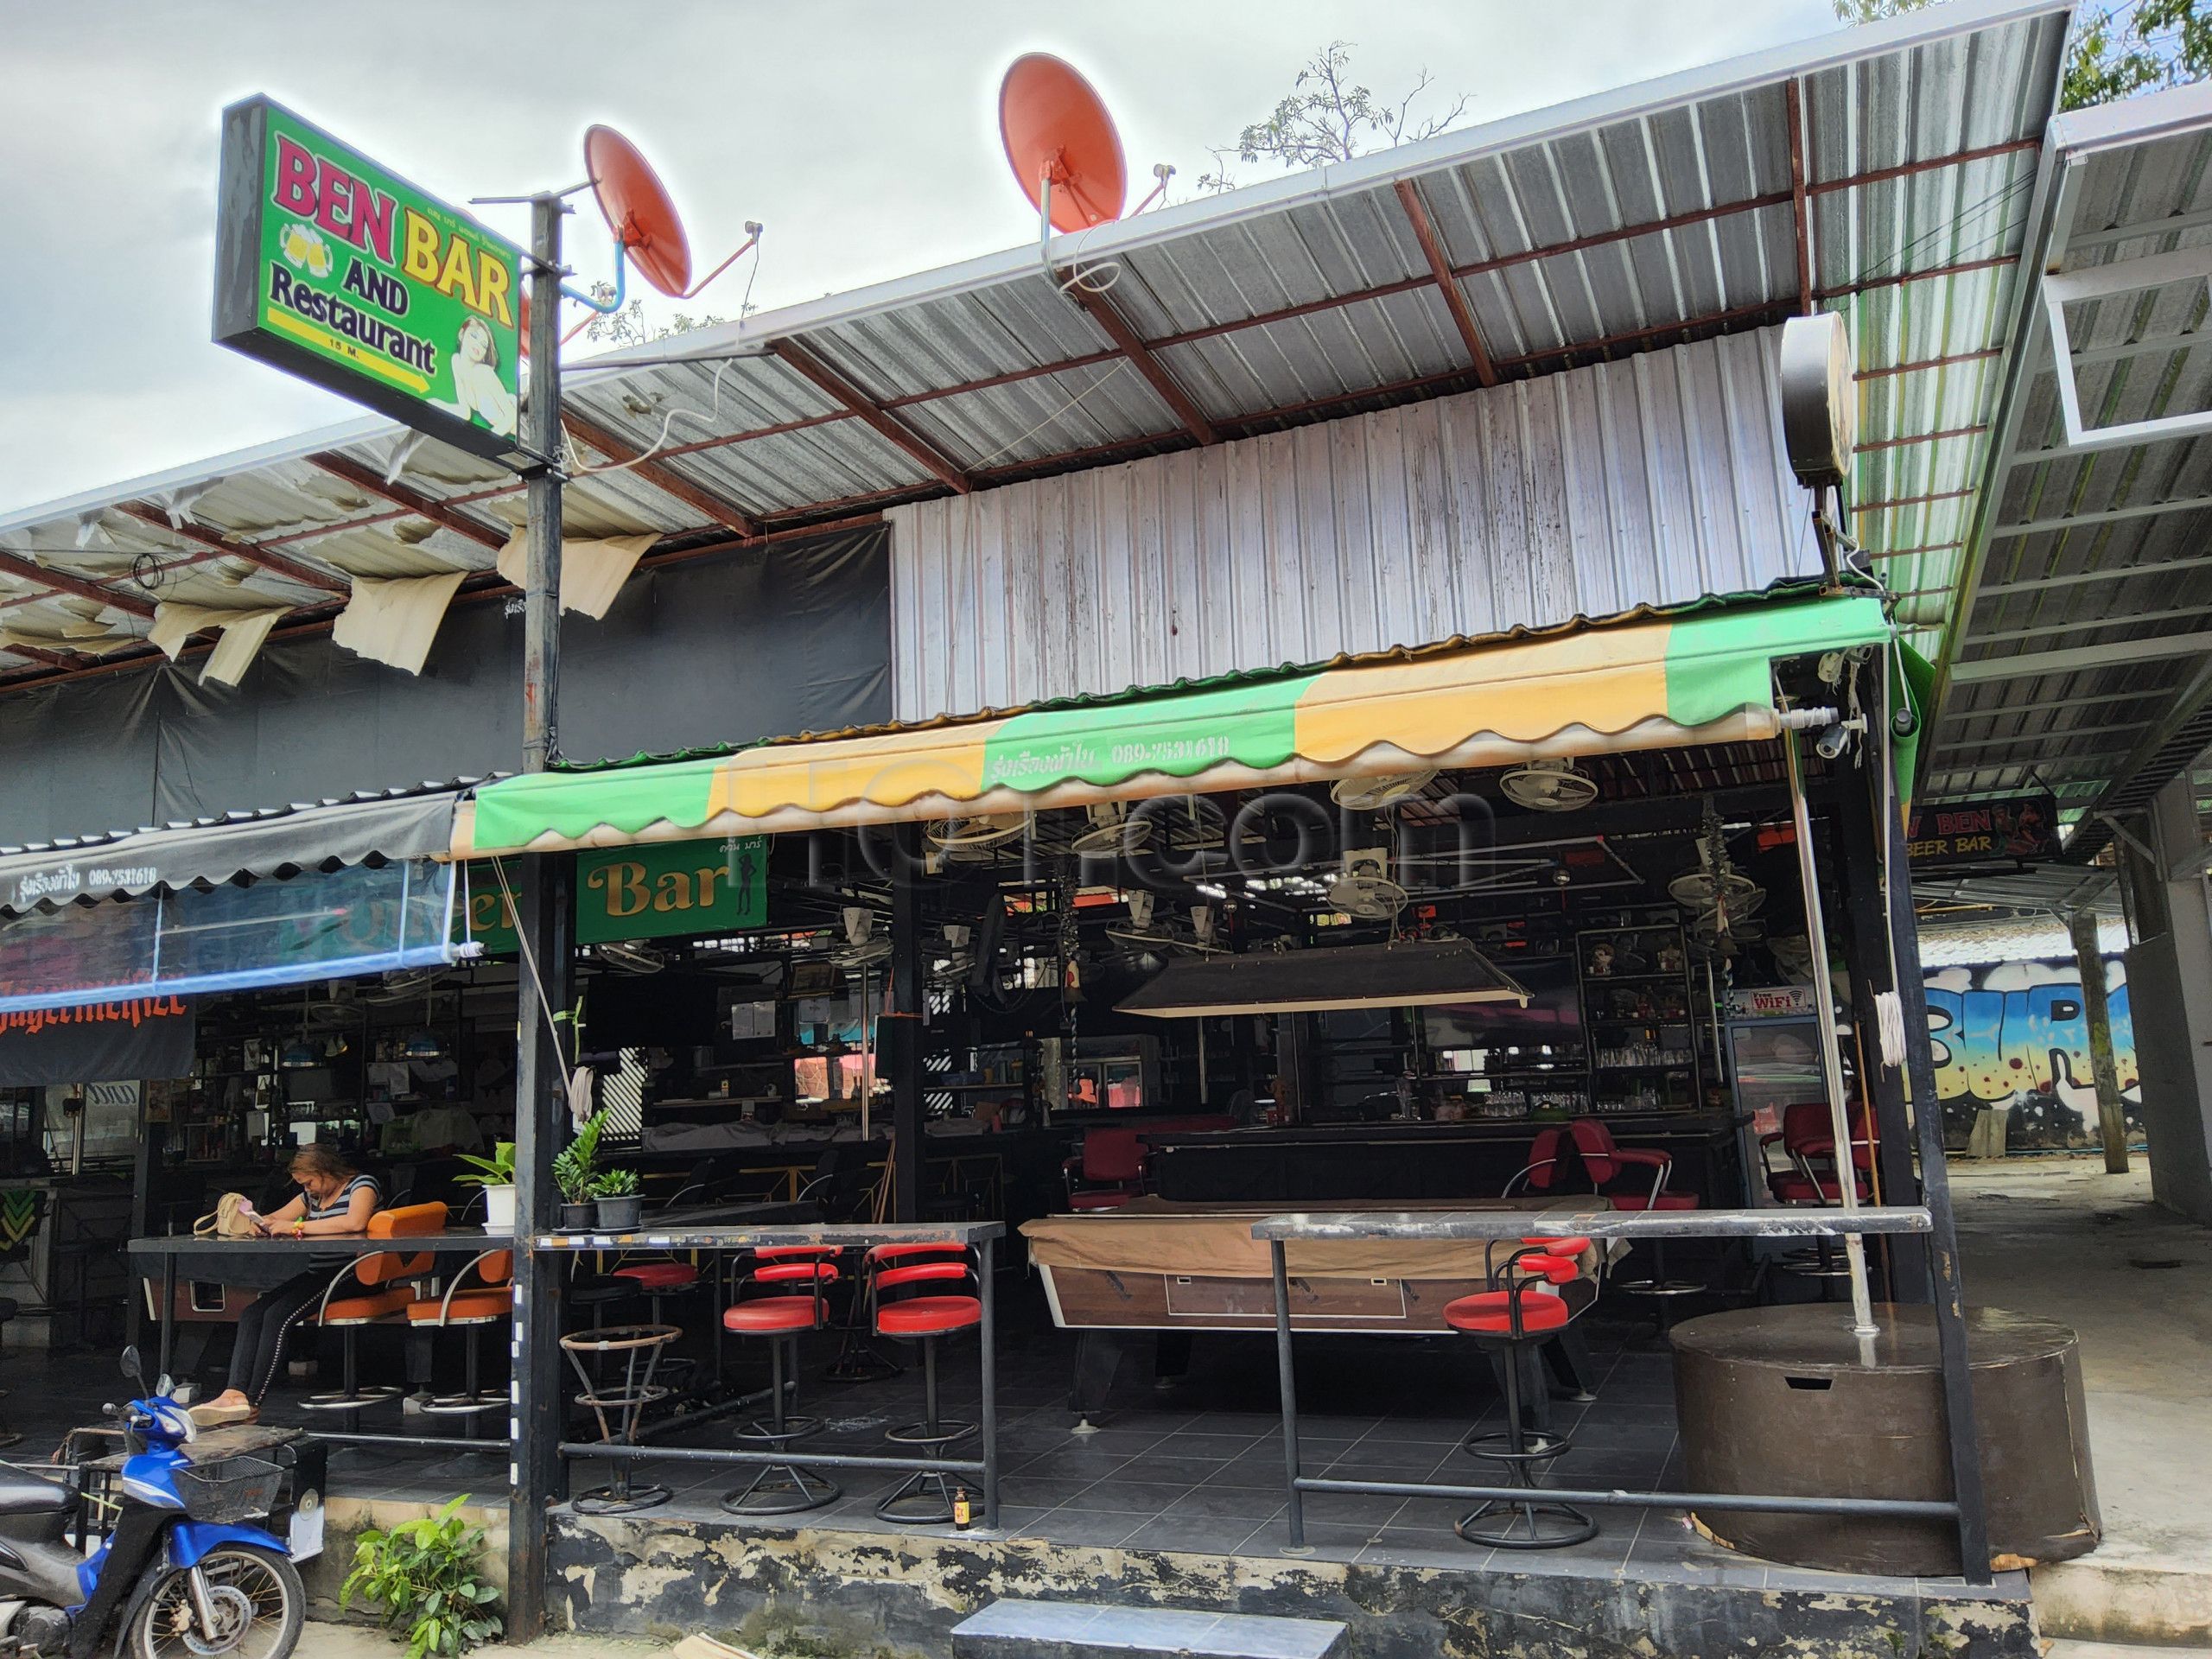 Pattaya, Thailand Ben Bar